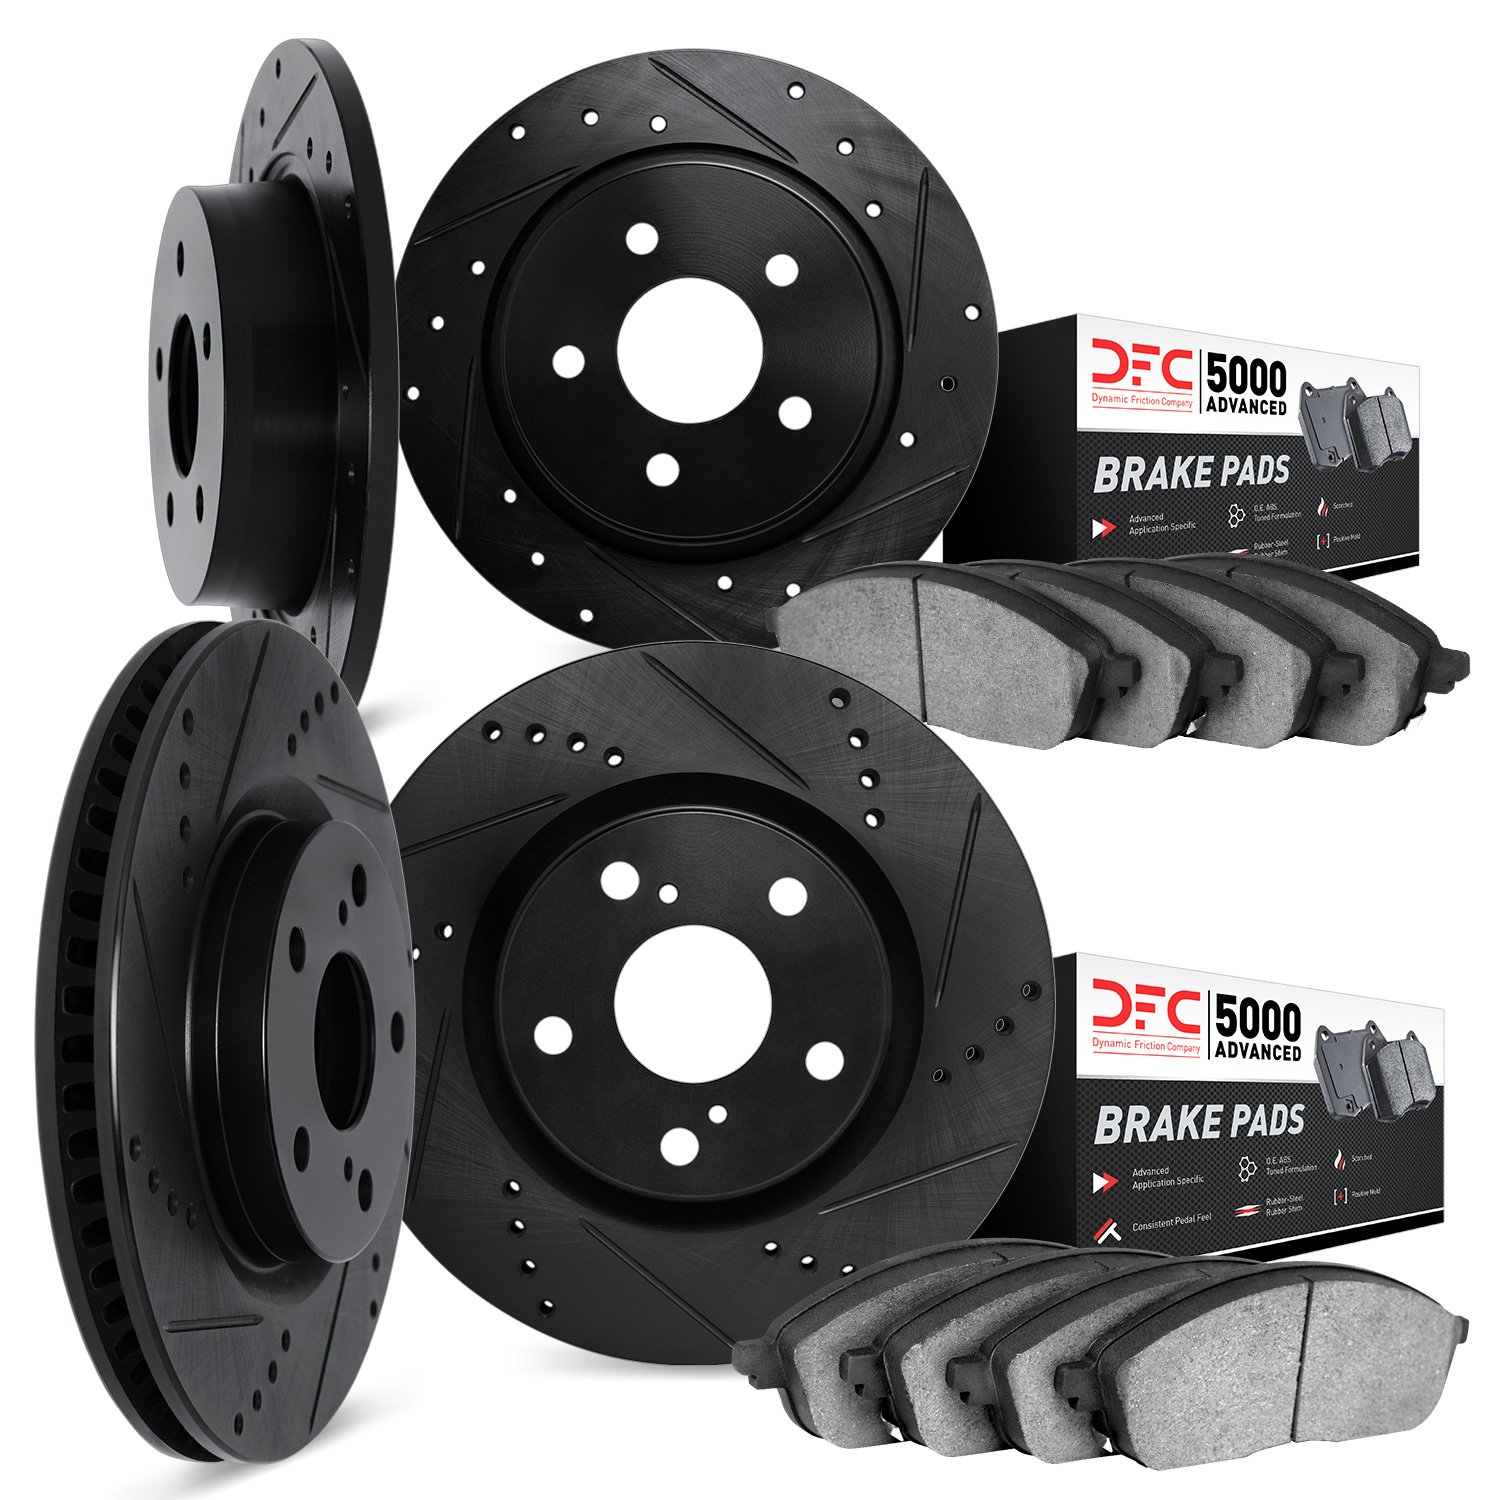 8504-54297 Drilled/Slotted Brake Rotors w/5000 Advanced Brake Pads Kit [Black], 2015-2019 Ford/Lincoln/Mercury/Mazda, Position: